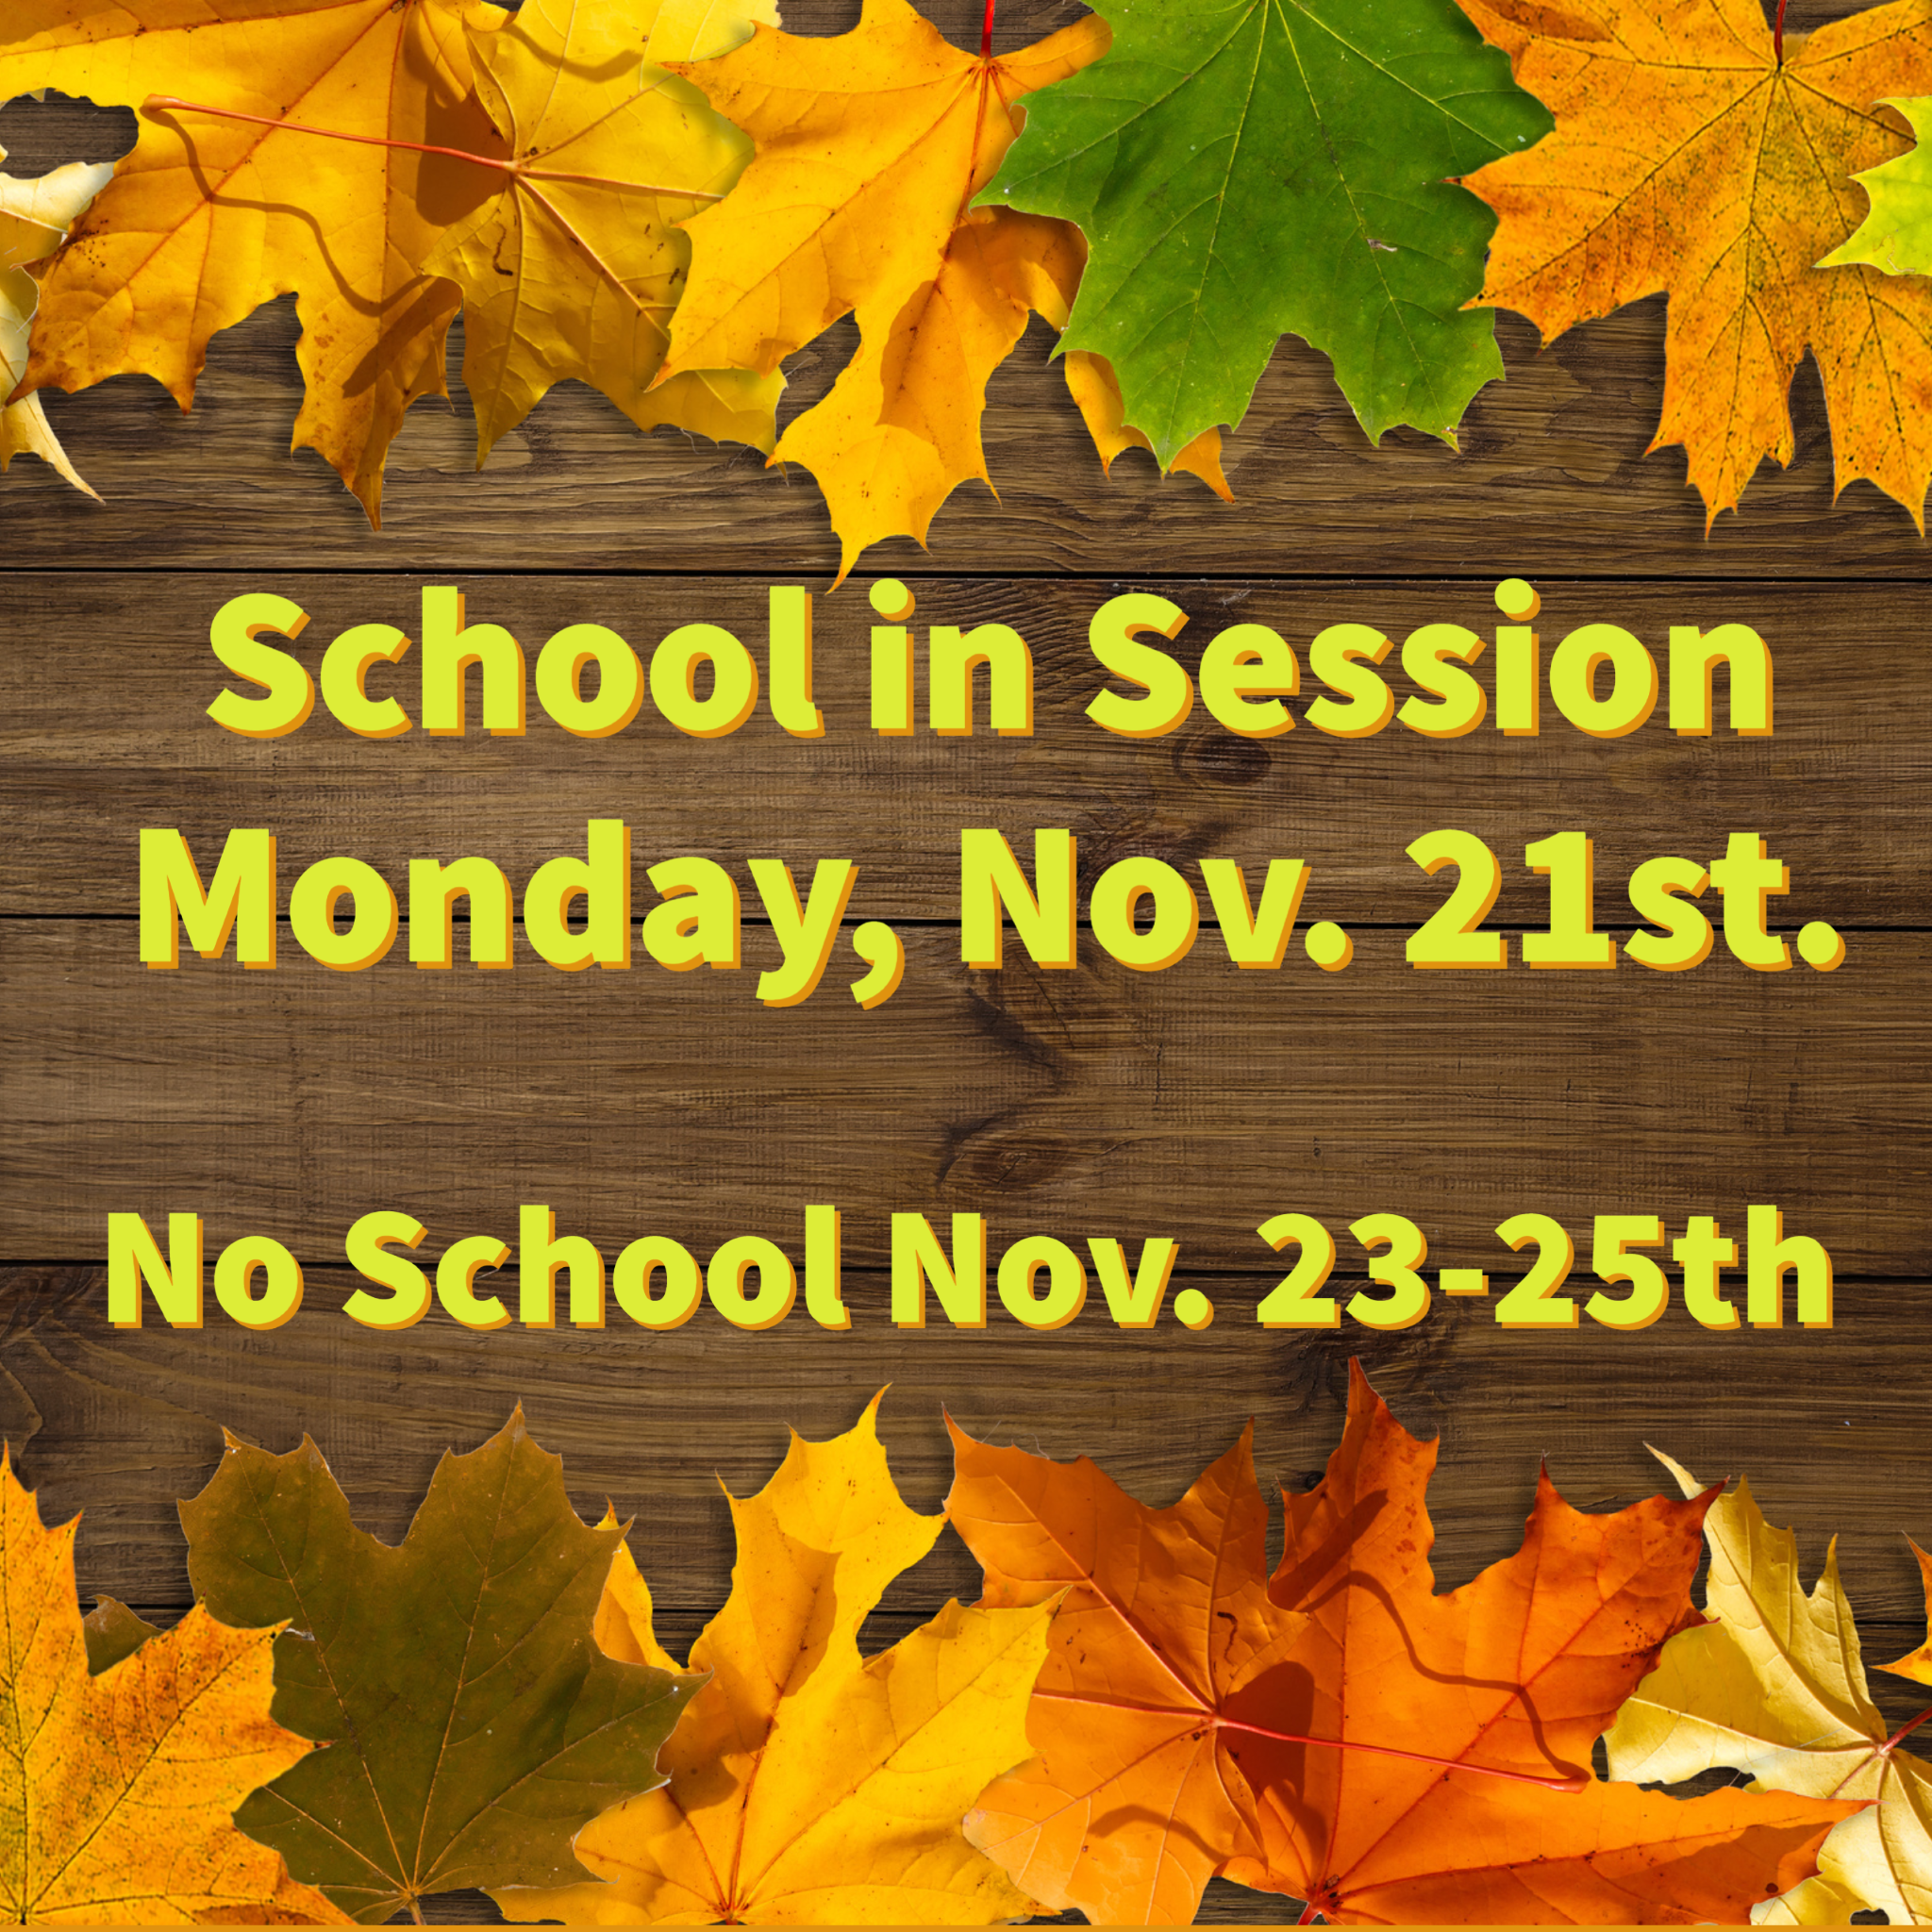 School in Session on Monday, Nov. 21st.  No school Nov. 23rd-25th.